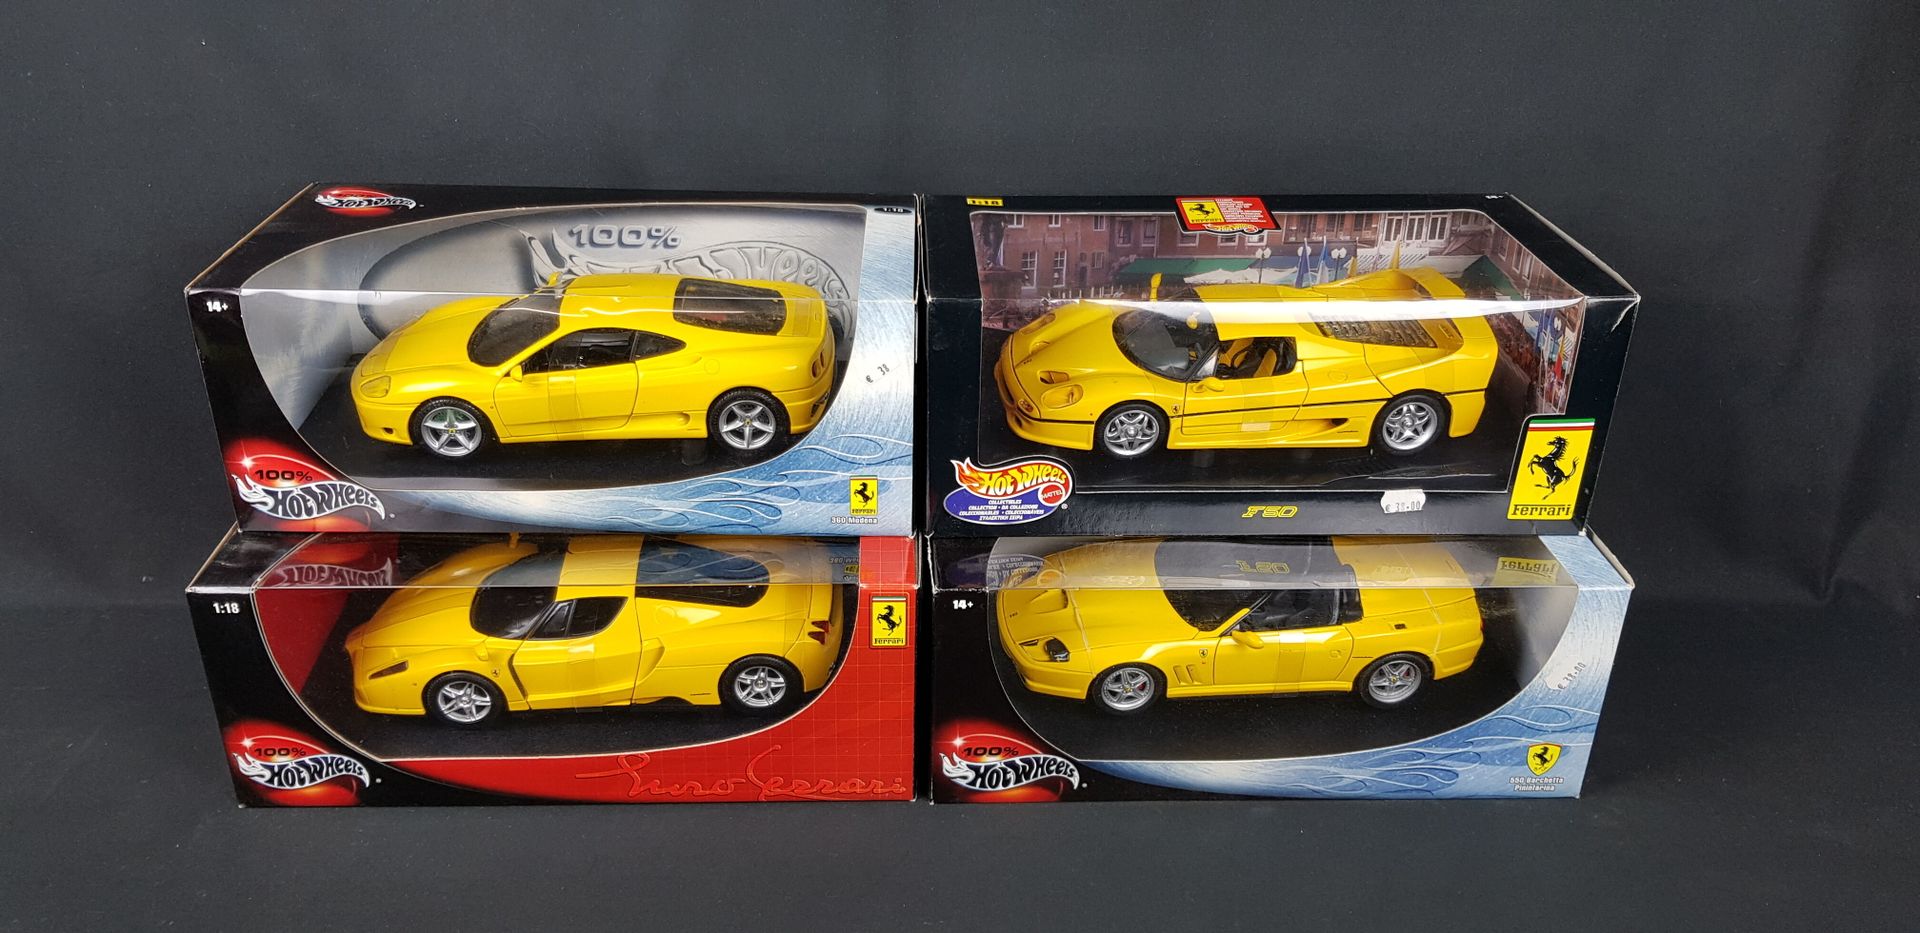 Null HOT WHEELS - QUATRE Ferrari échelle 1/18 ;

1x Buro

1x F50

1x 360 Modena
&hellip;